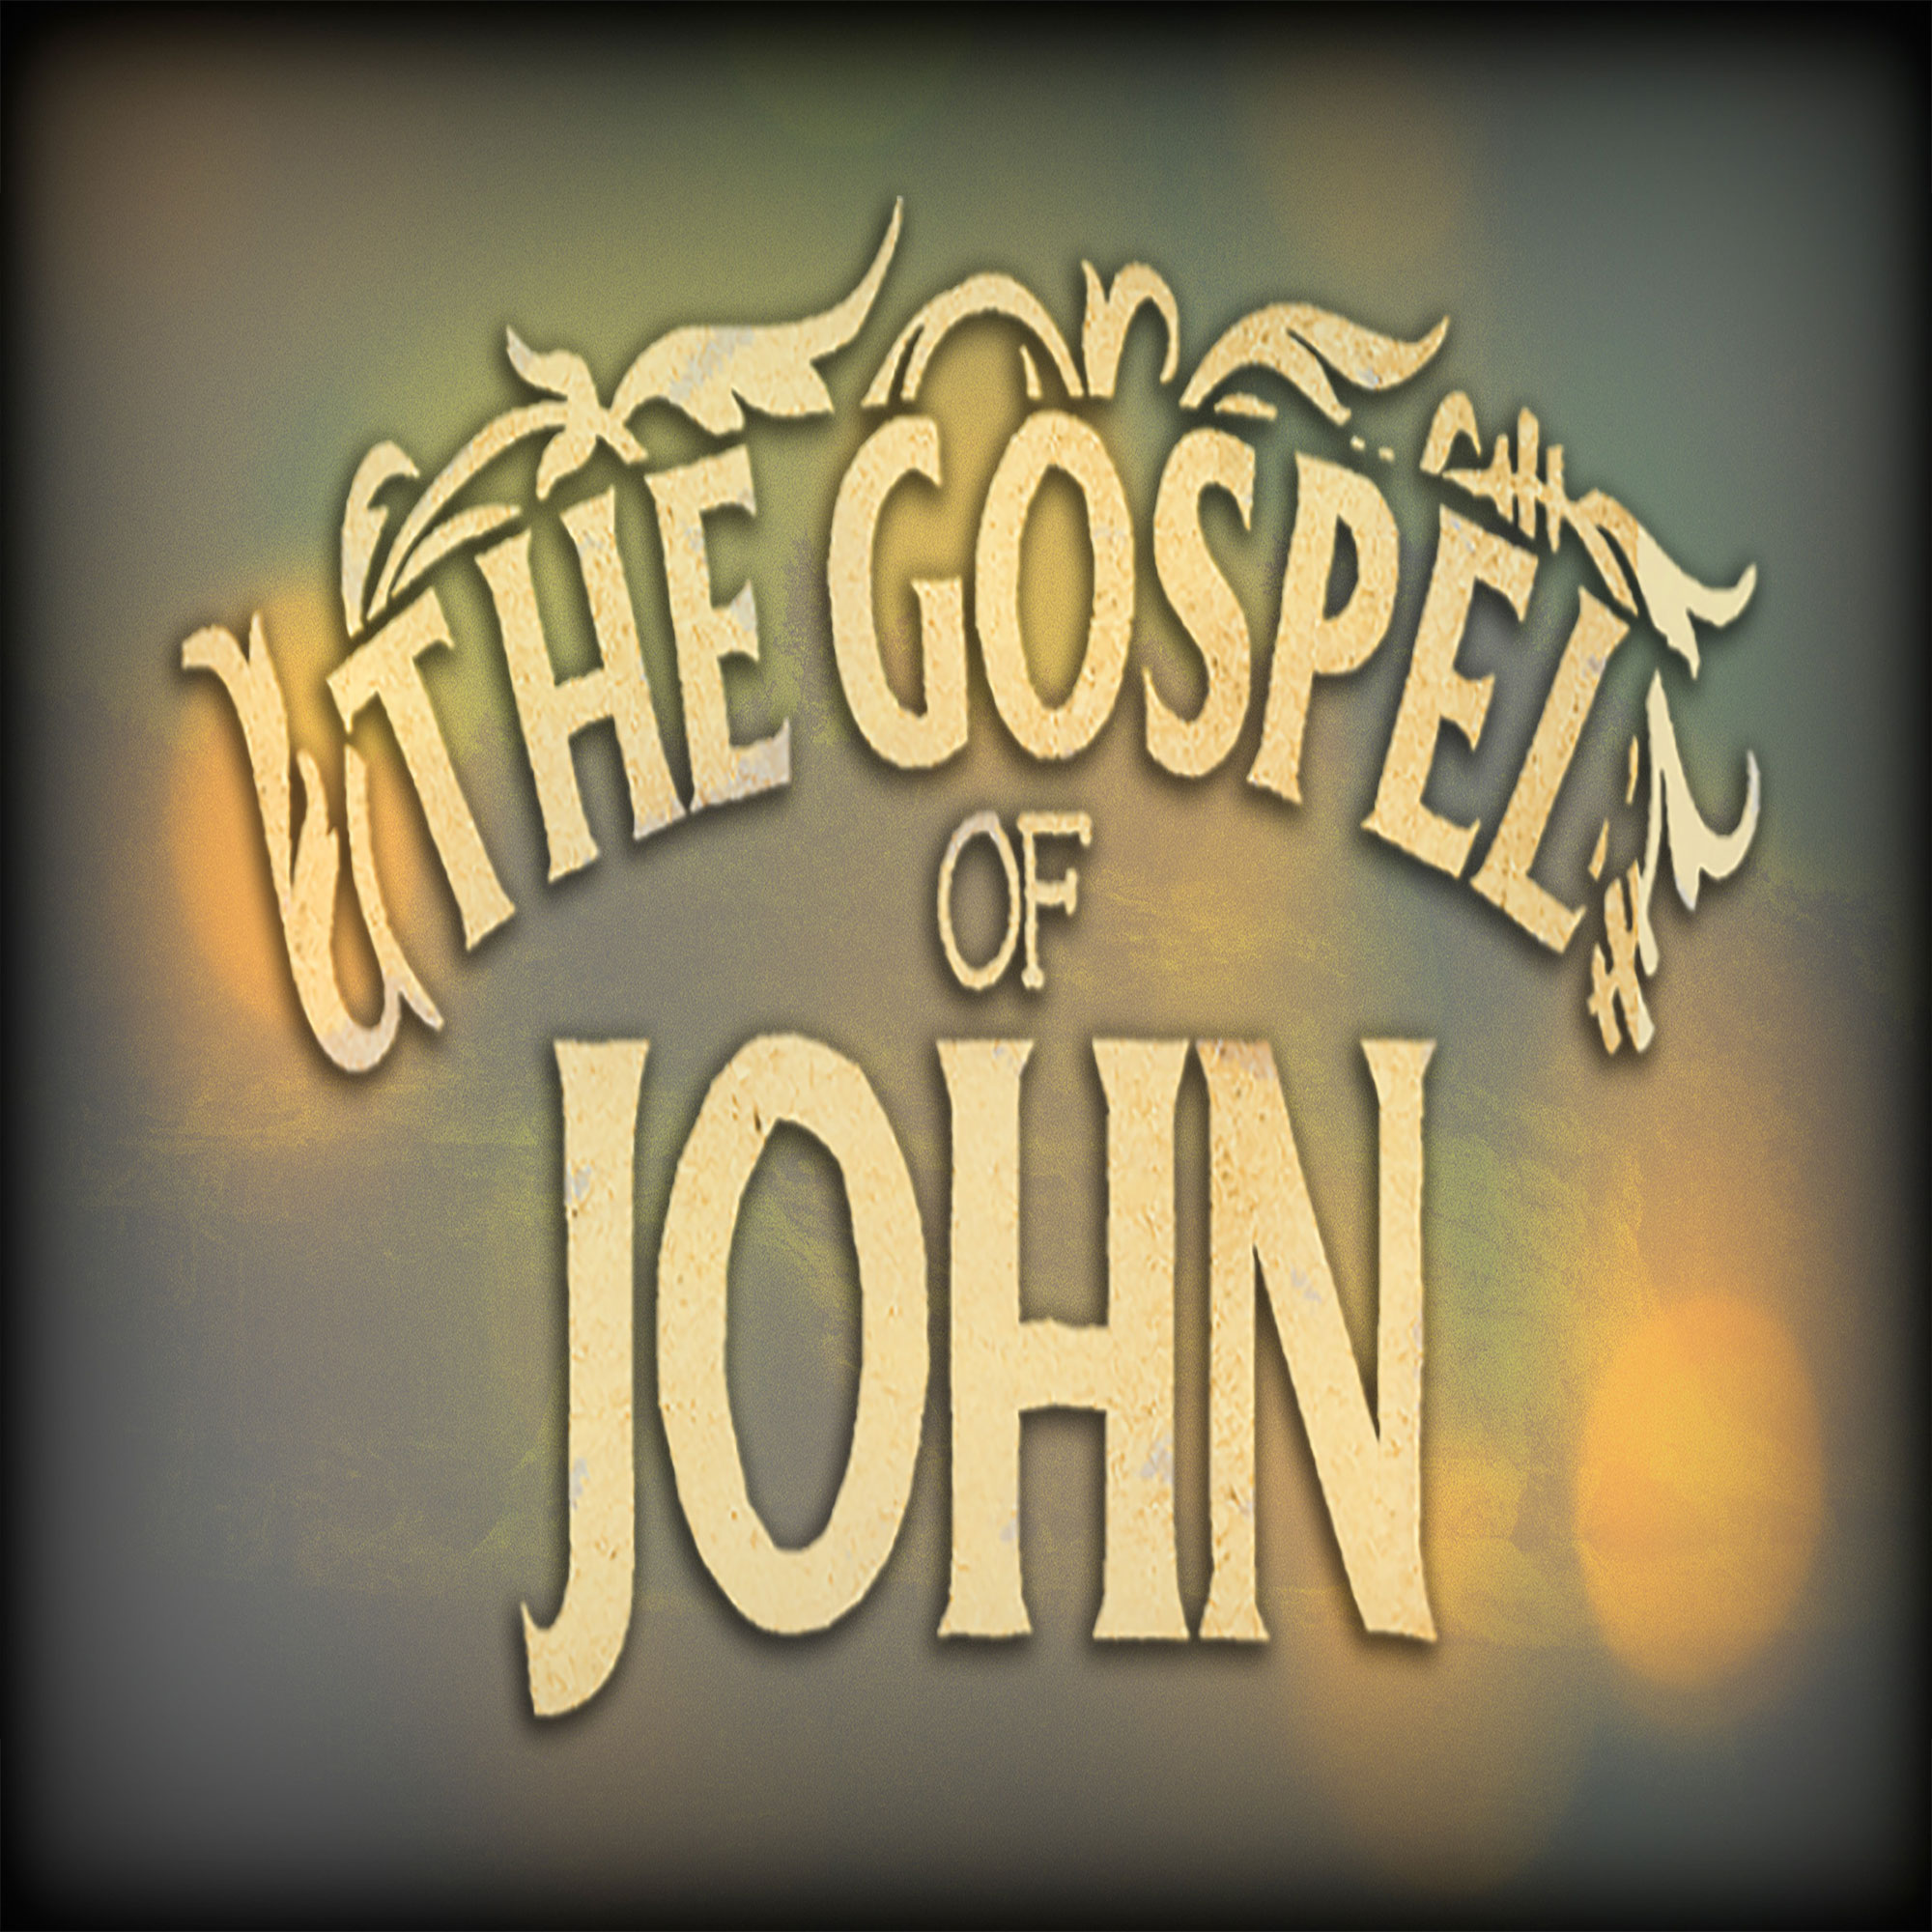 Gospel of John - Comfy Chair or Church Chair?